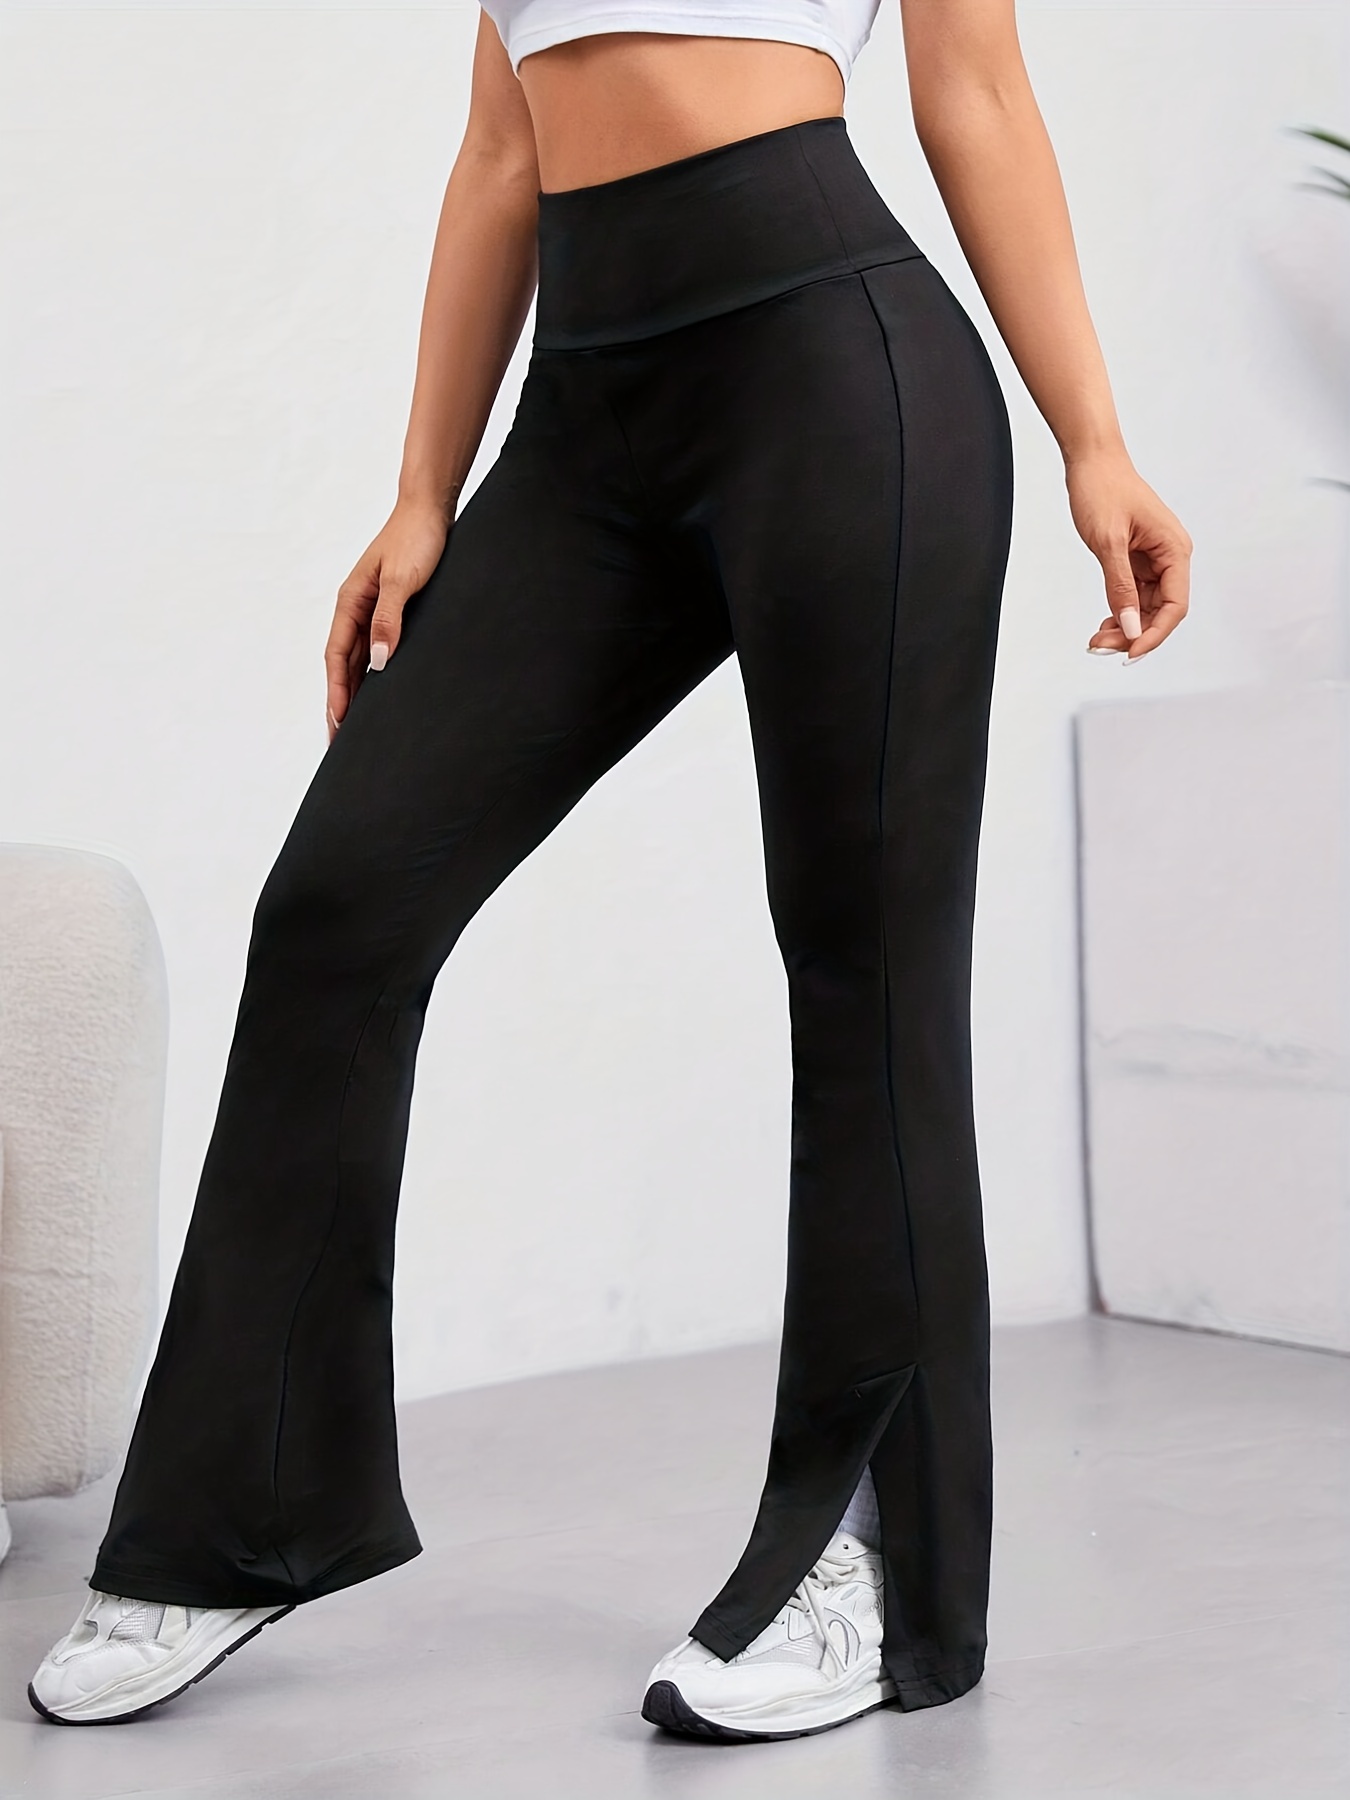 Work Pants For Women Clearance Hot Sale Women's Fashion Casual Solid Color  Split Mid Waist Loose No Belt Elasticity Wide Leg Long Pants 